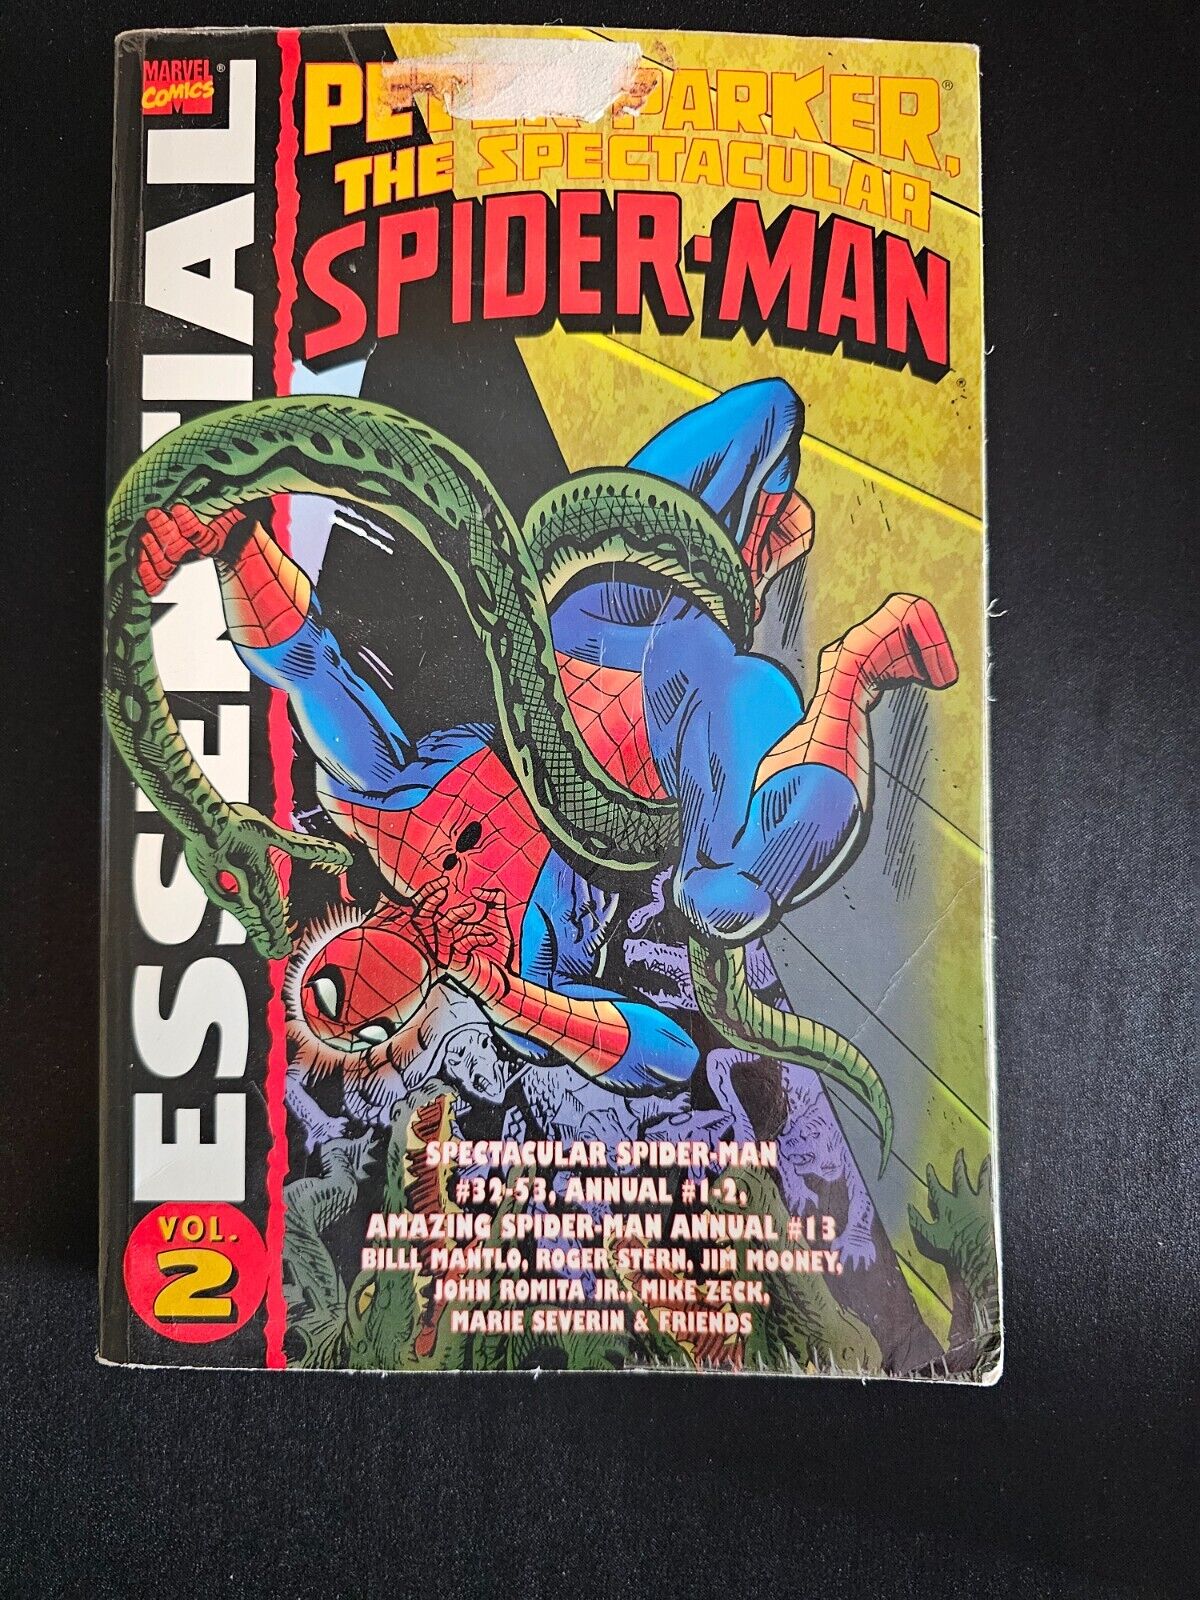 Essential Peter Parker, The Spectacular Spider-Man, Vol. 2 (Marvel Essentials)